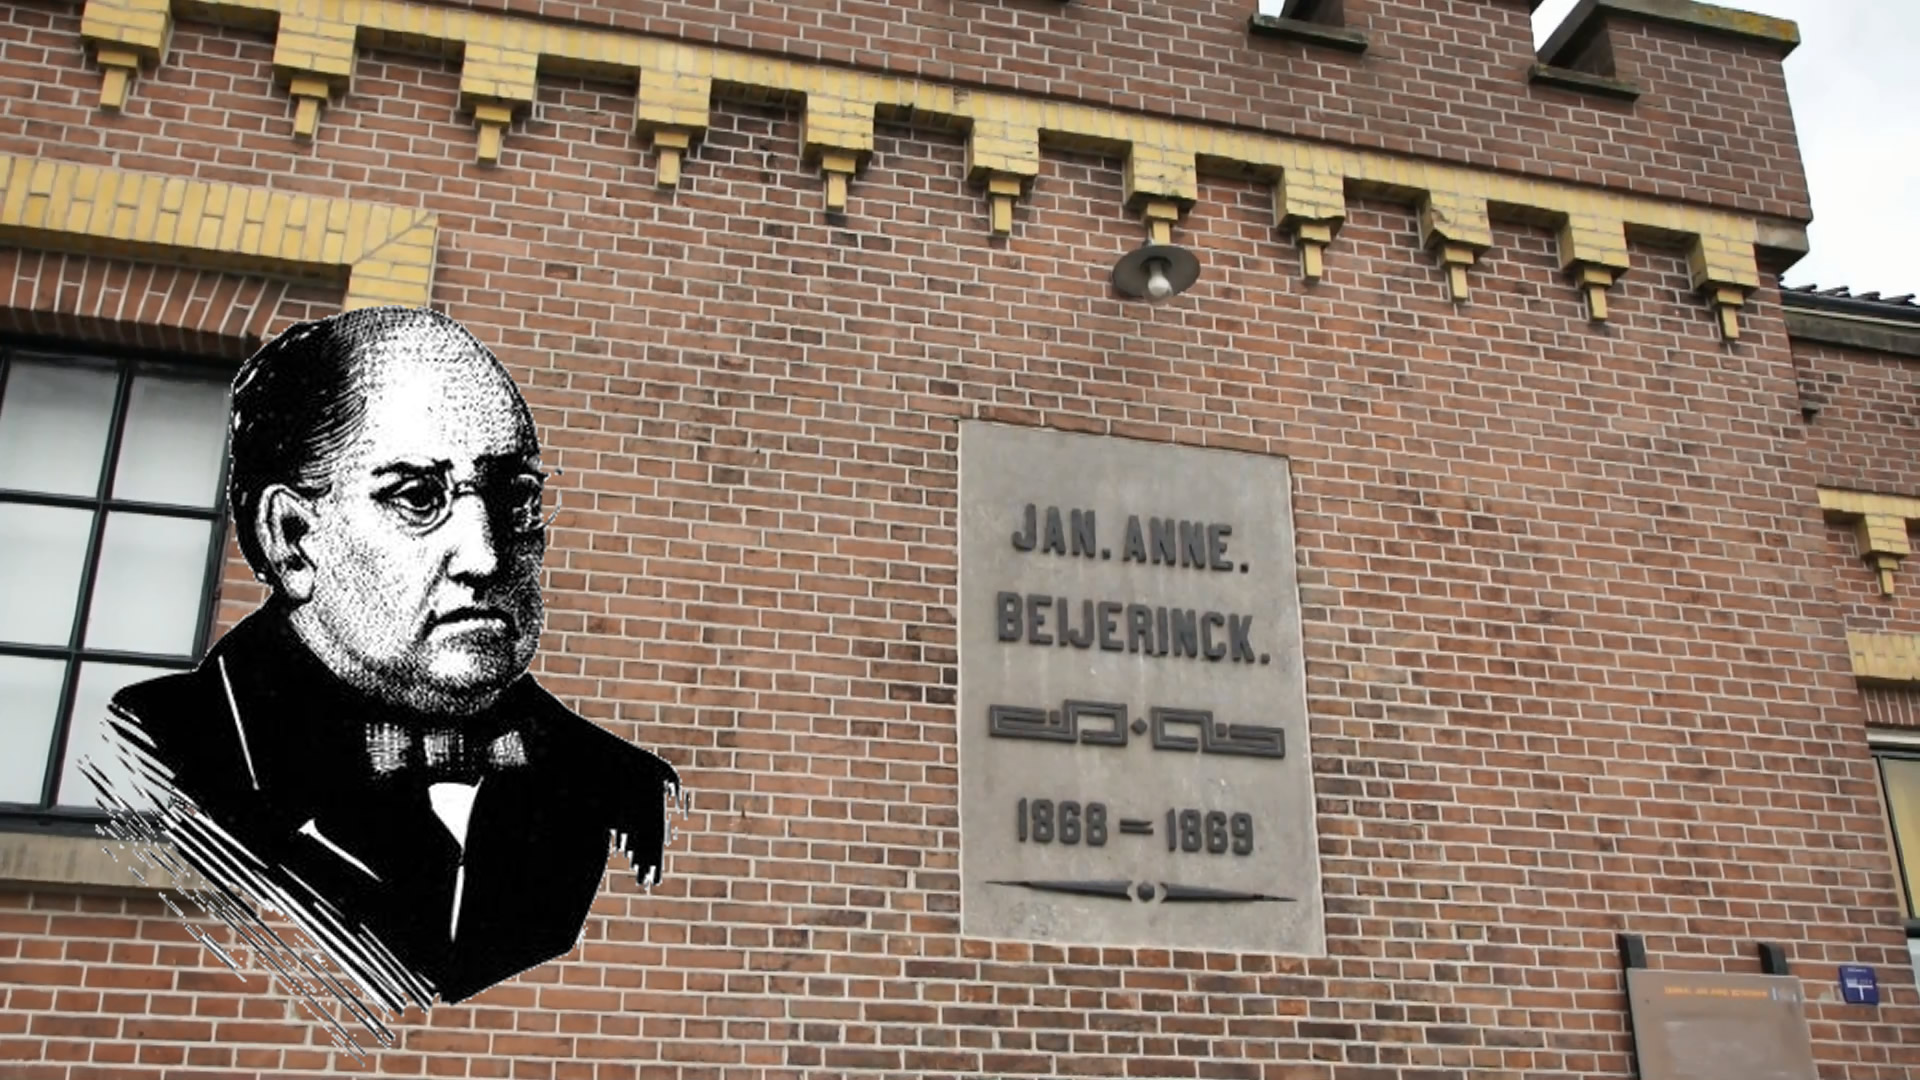 Wie was Jan Anne Beijerinck